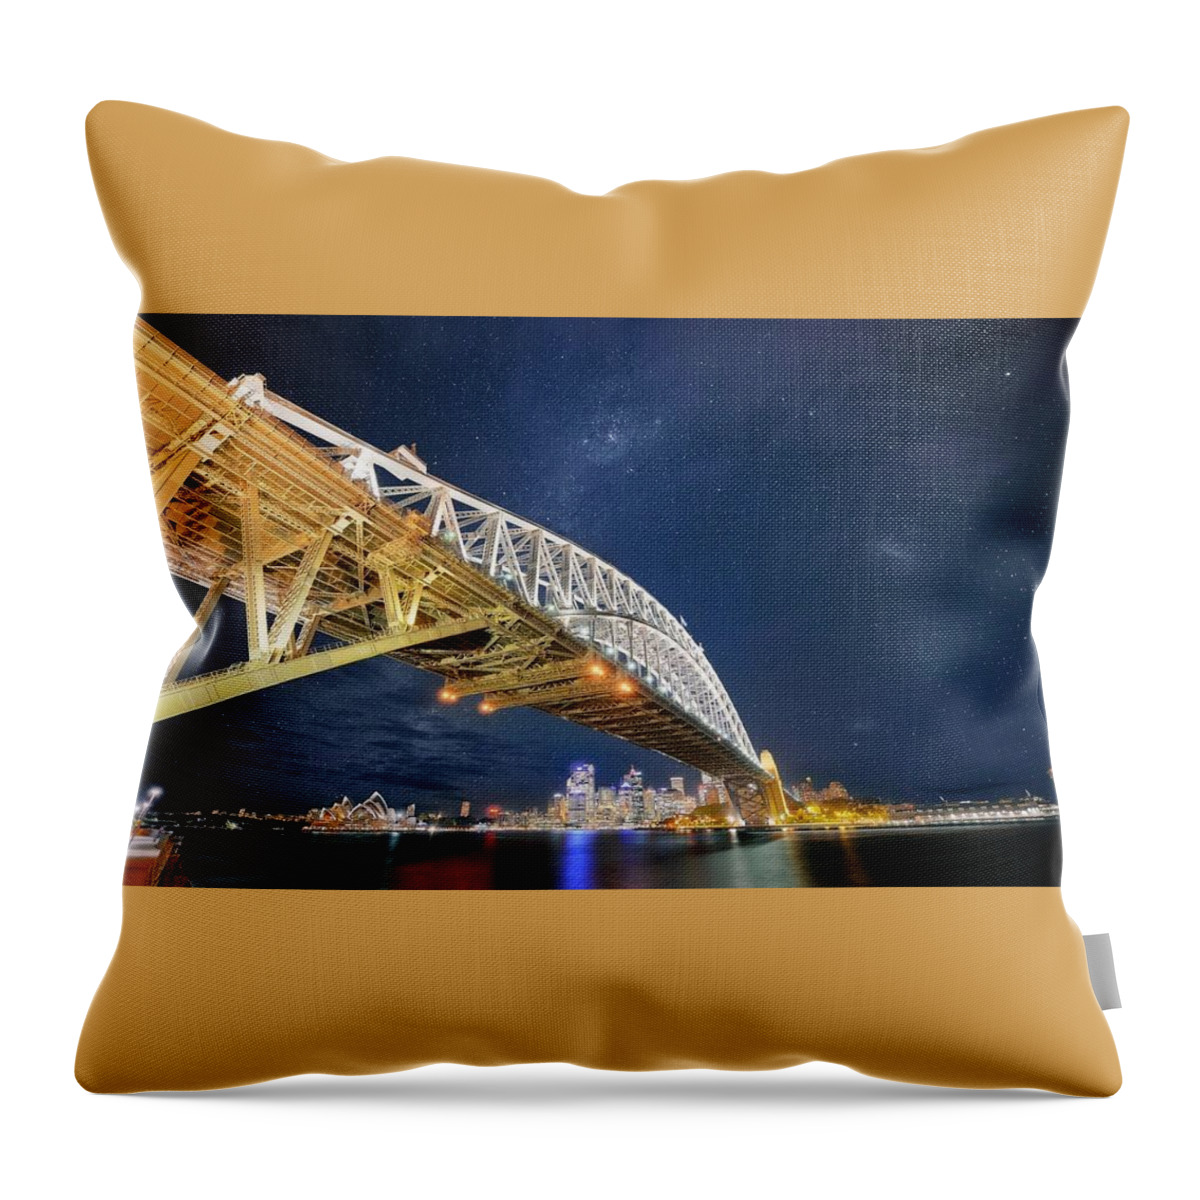 Sydney Harbour Bridge Throw Pillow featuring the photograph Sydney Harbour Bridge by Jackie Russo